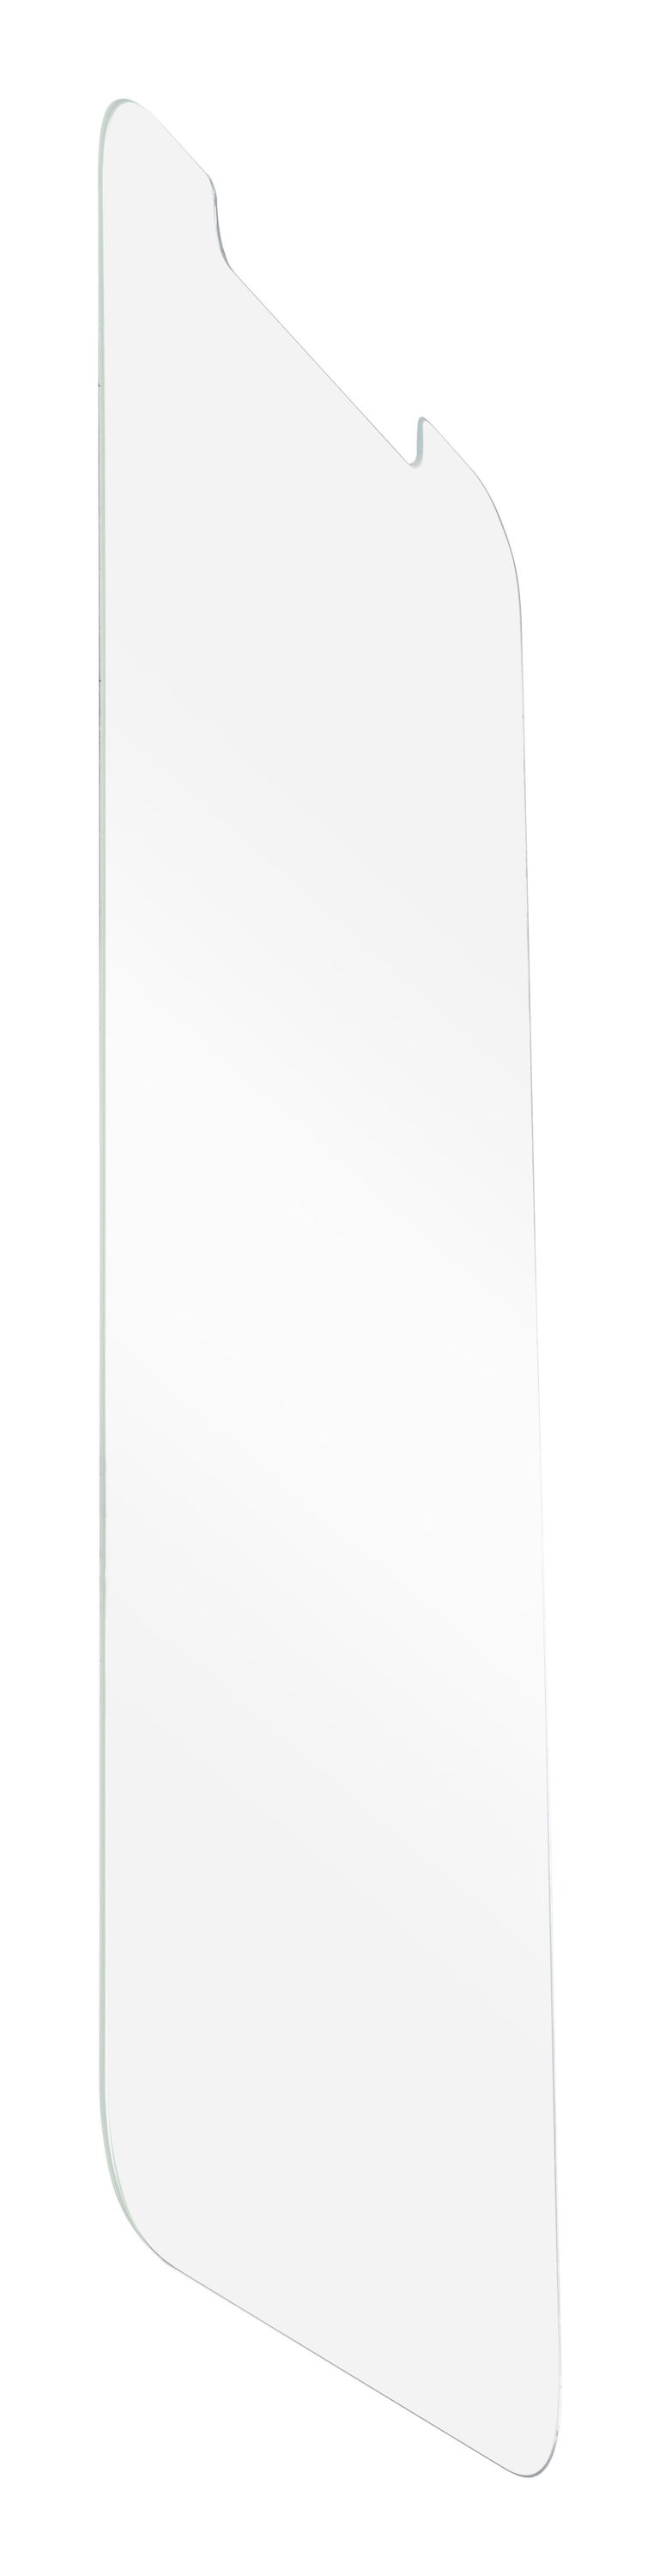 iPhone 12 Pro Max, prot. d'cran tetra glass, transparent